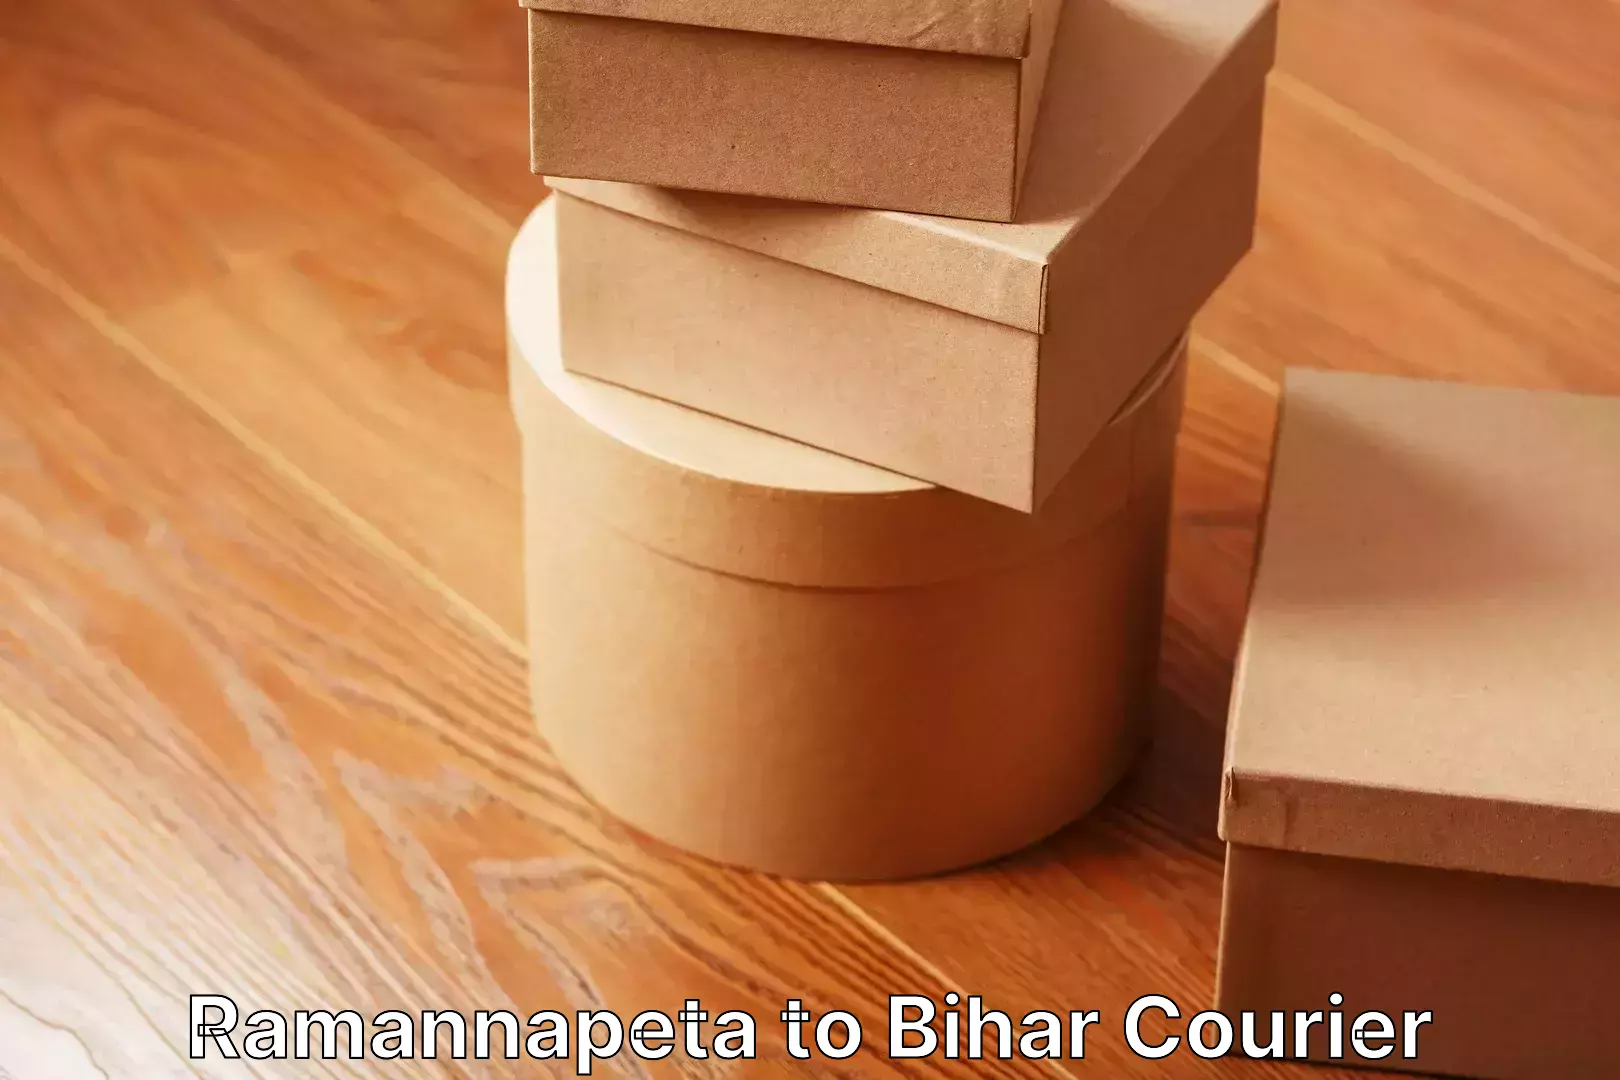 Moving and storage services Ramannapeta to Bihar